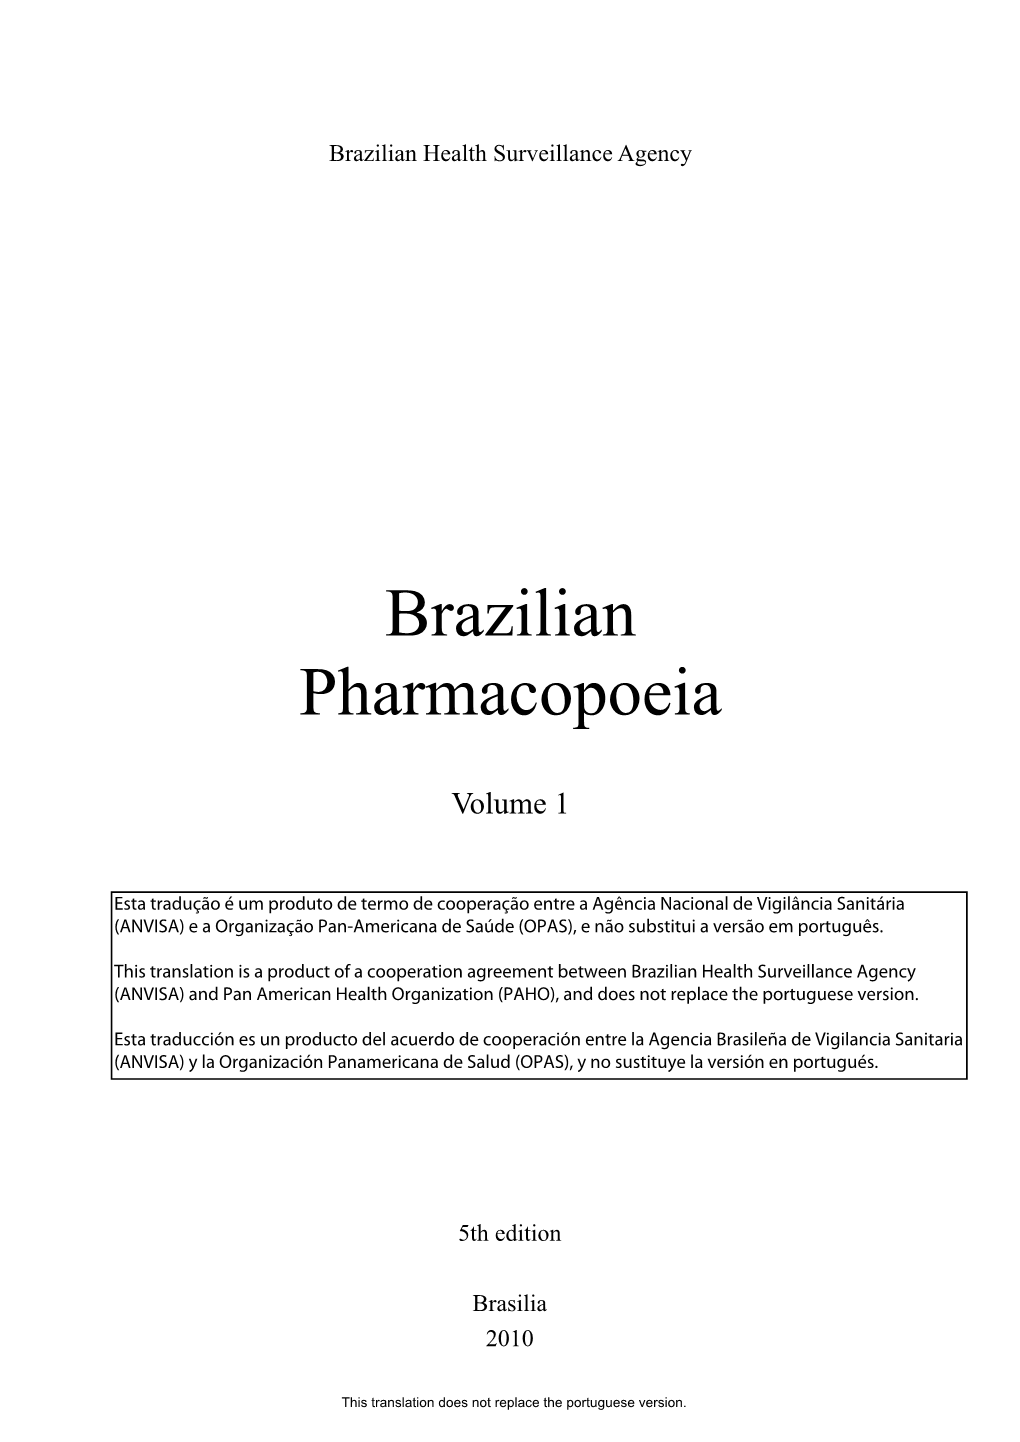 Brazilian Pharmacopoeia